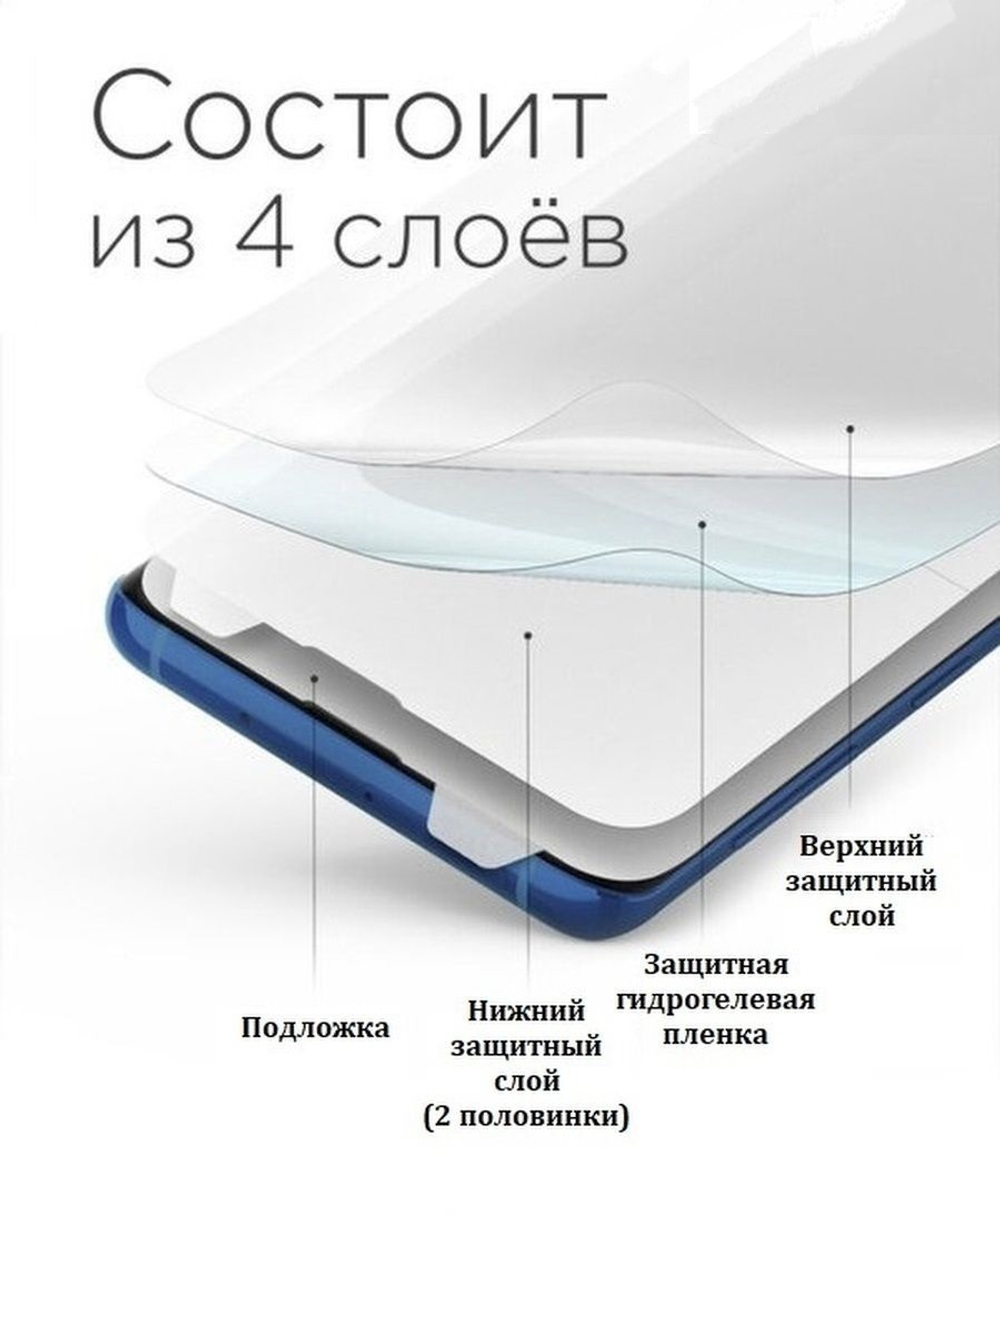 Защитная пленка гидрогелевая для Samsung T311 (Tab 3 8.0 3G) (самовосстанавливающаяся глянцевая)